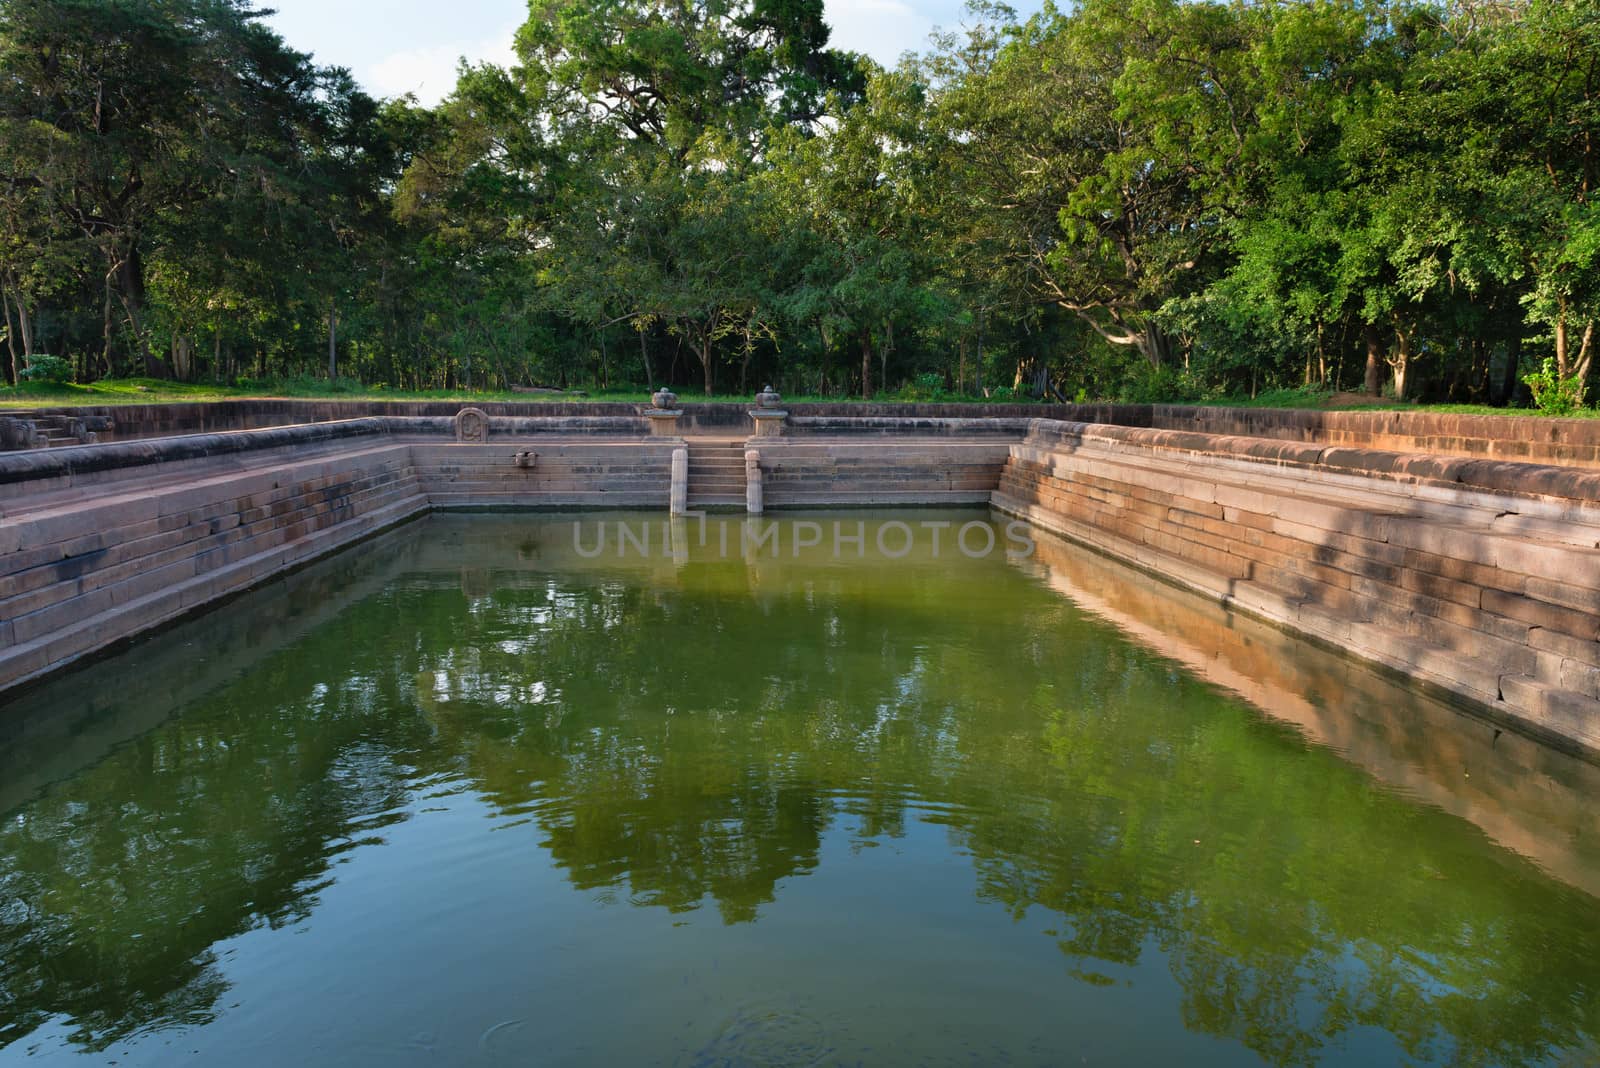 Ruins of the ancient city Anuradhapura, Sri Lanka. Kuttam Pokuna (twin ponds) are bathing tanks or pools in ancient Sri Lanka.